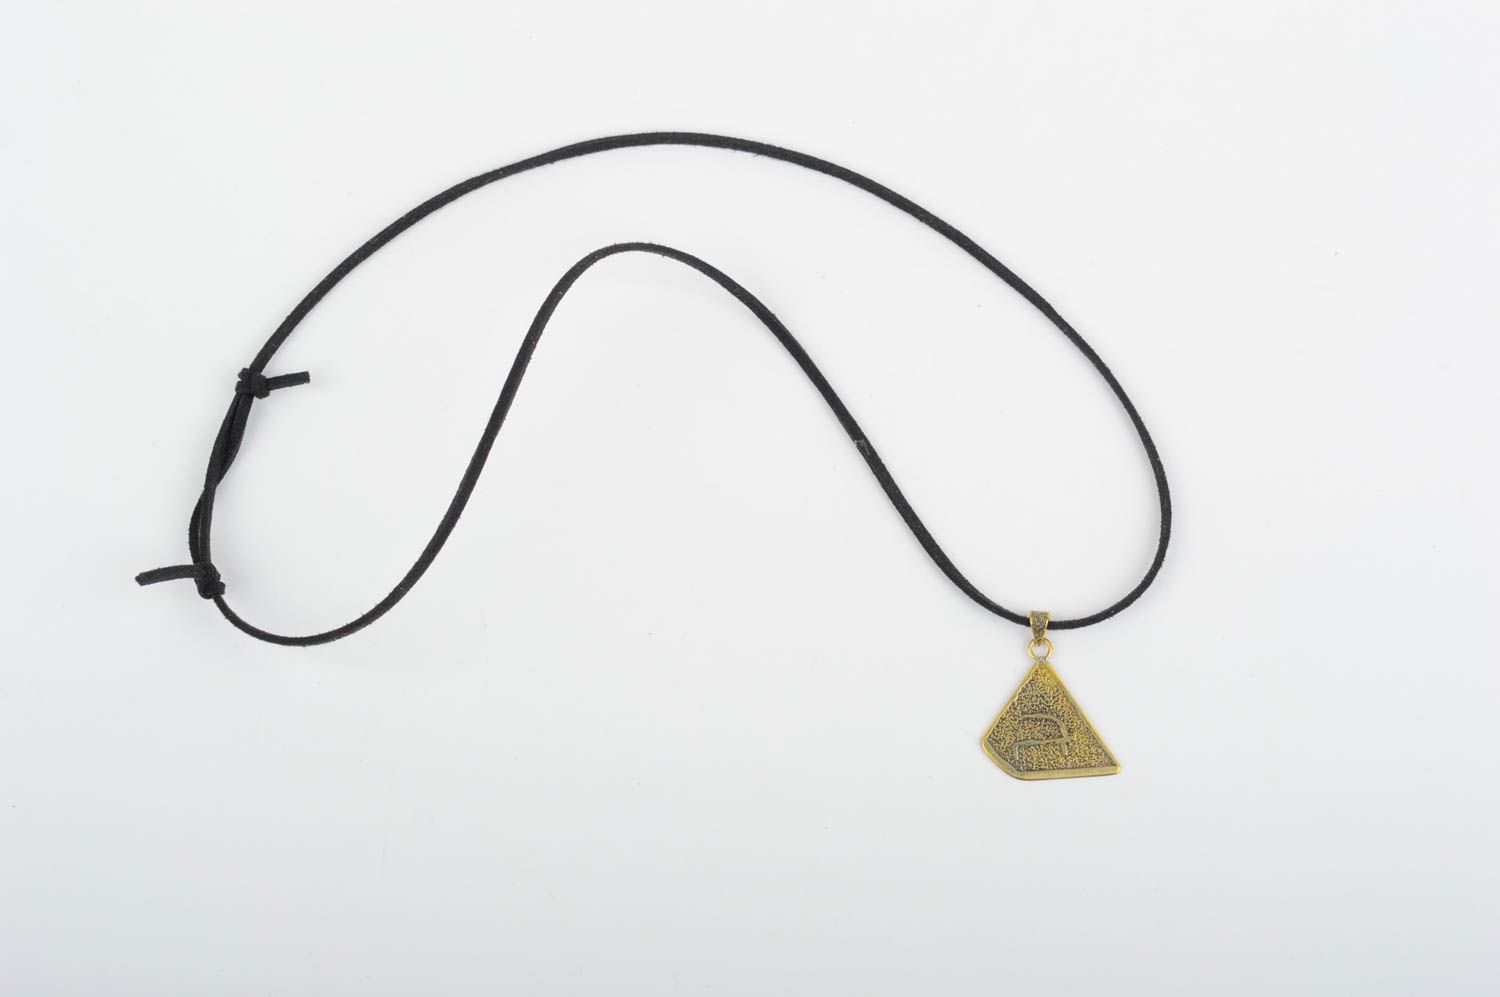 Handmade pendant unusual accessory brass jewelry unusual pendant gift for her photo 2